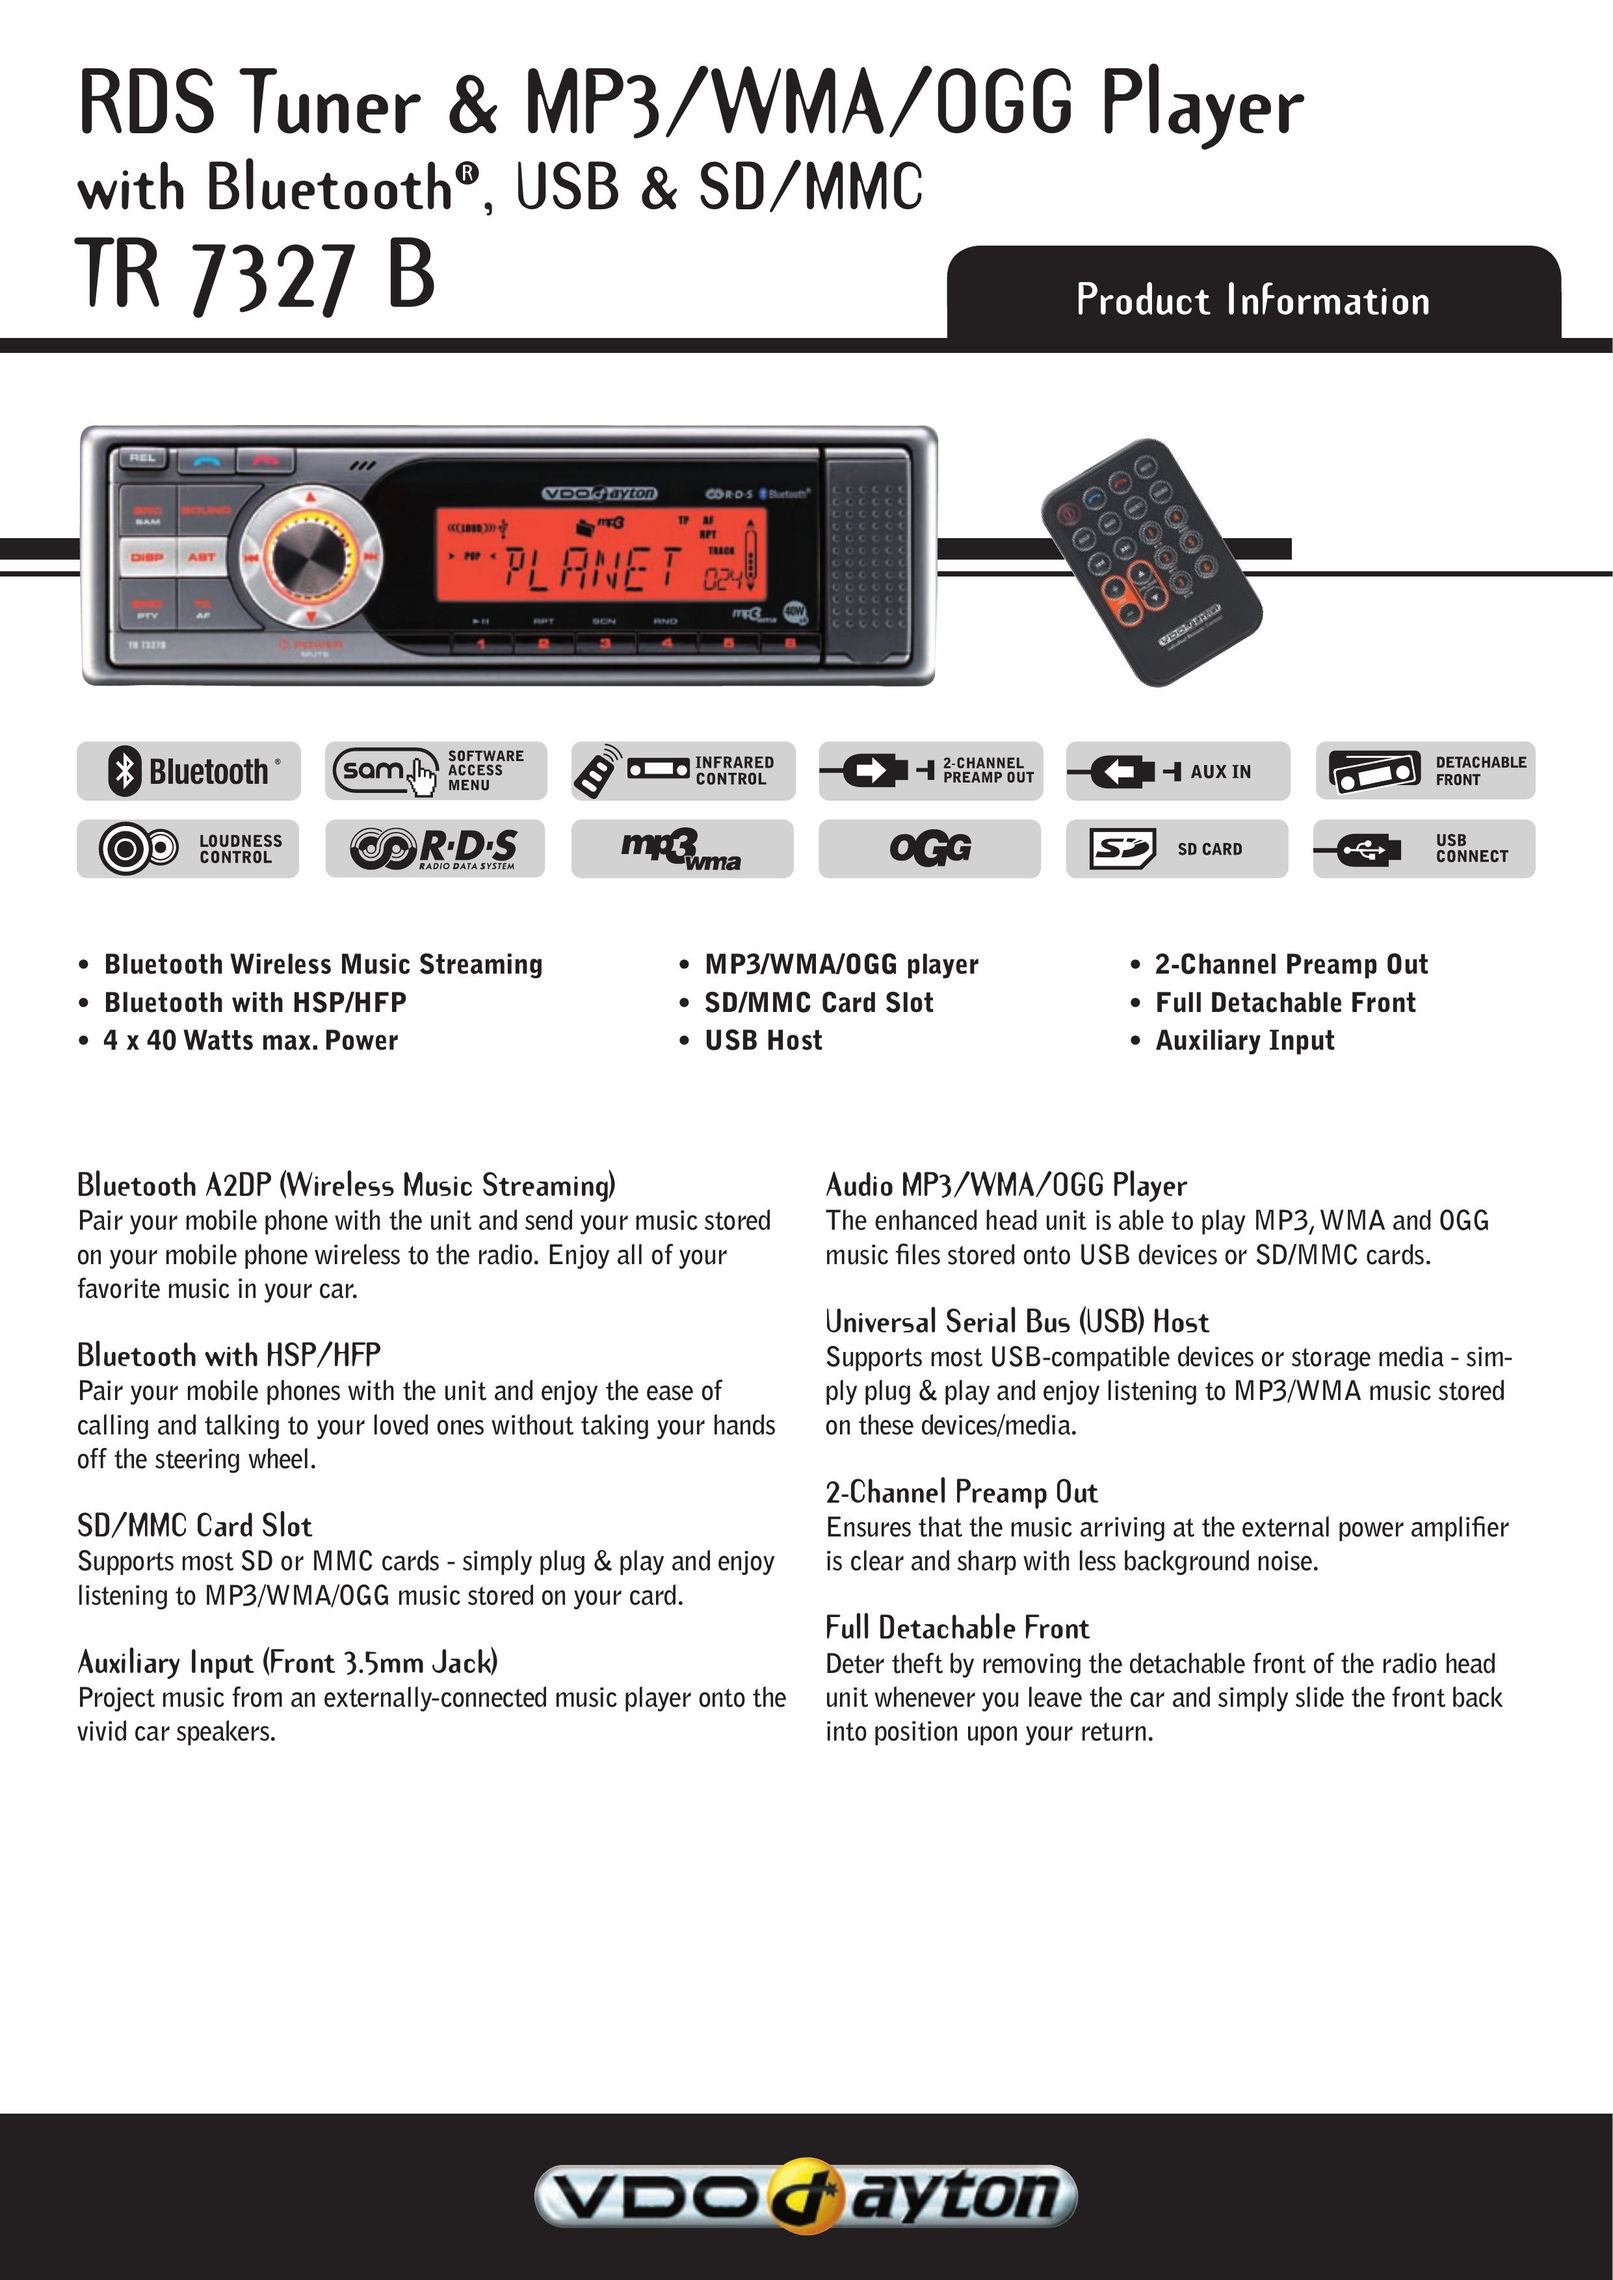 VDO Dayton TR 7327 B MP3 Player User Manual